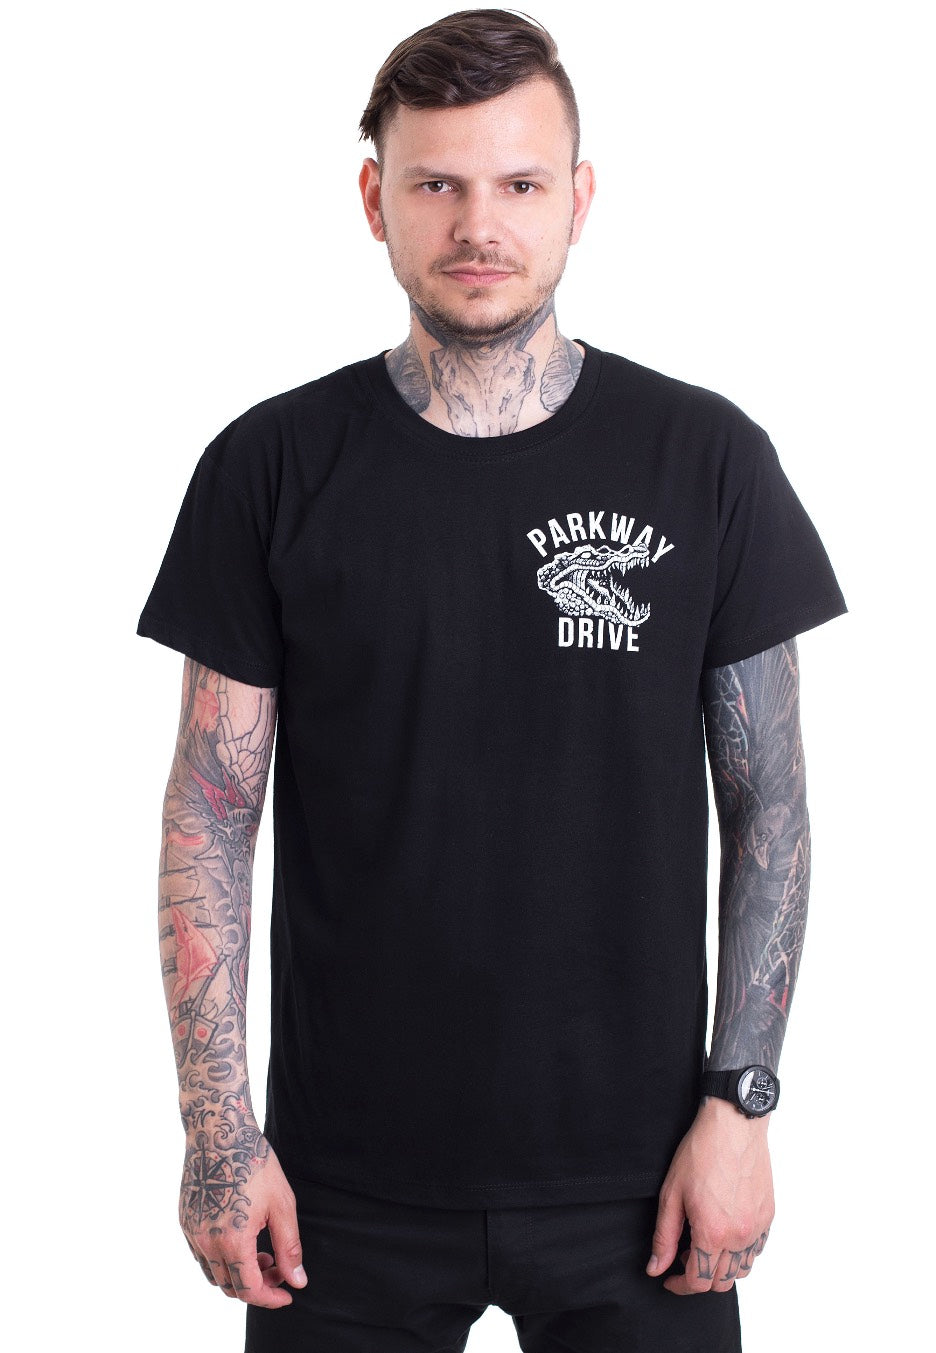 Parkway Drive - Croc - T-Shirt